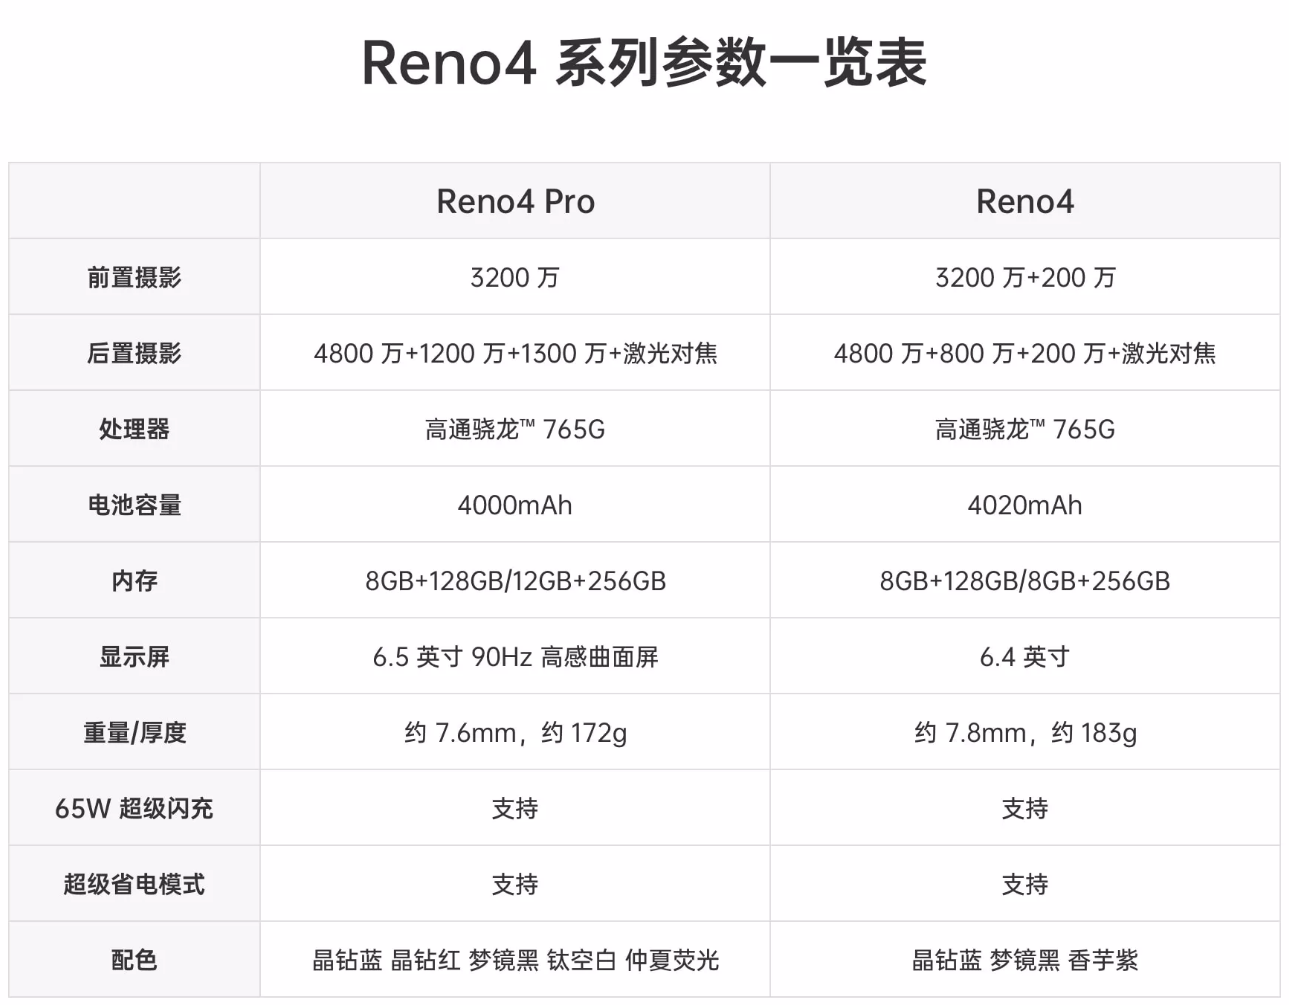 oppo于6月5日晚间在线上发布了reno4系列手机.